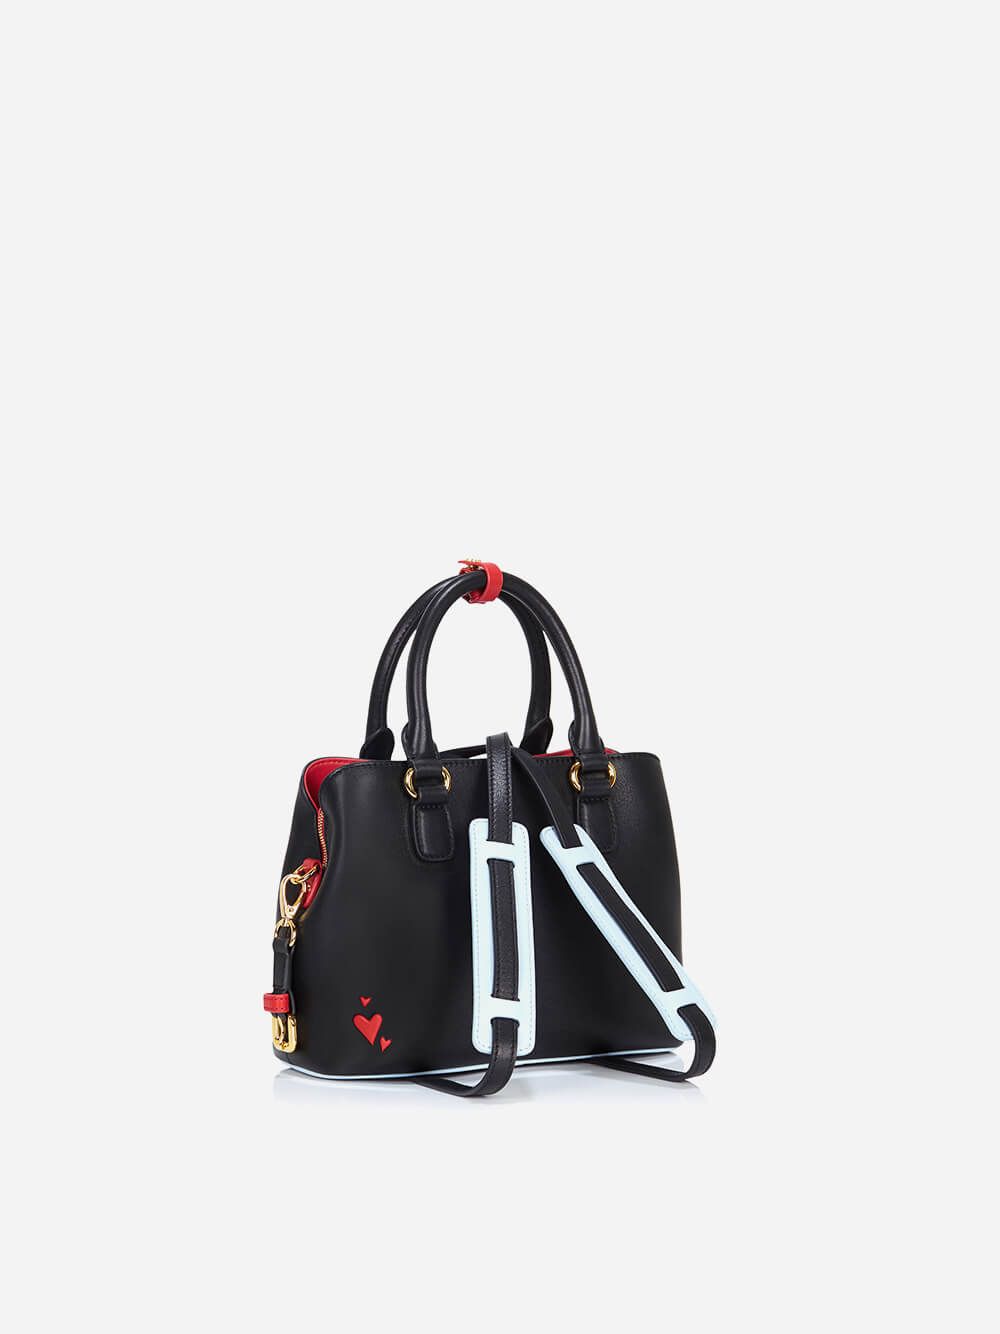 XM Black Red Bag | Any Di